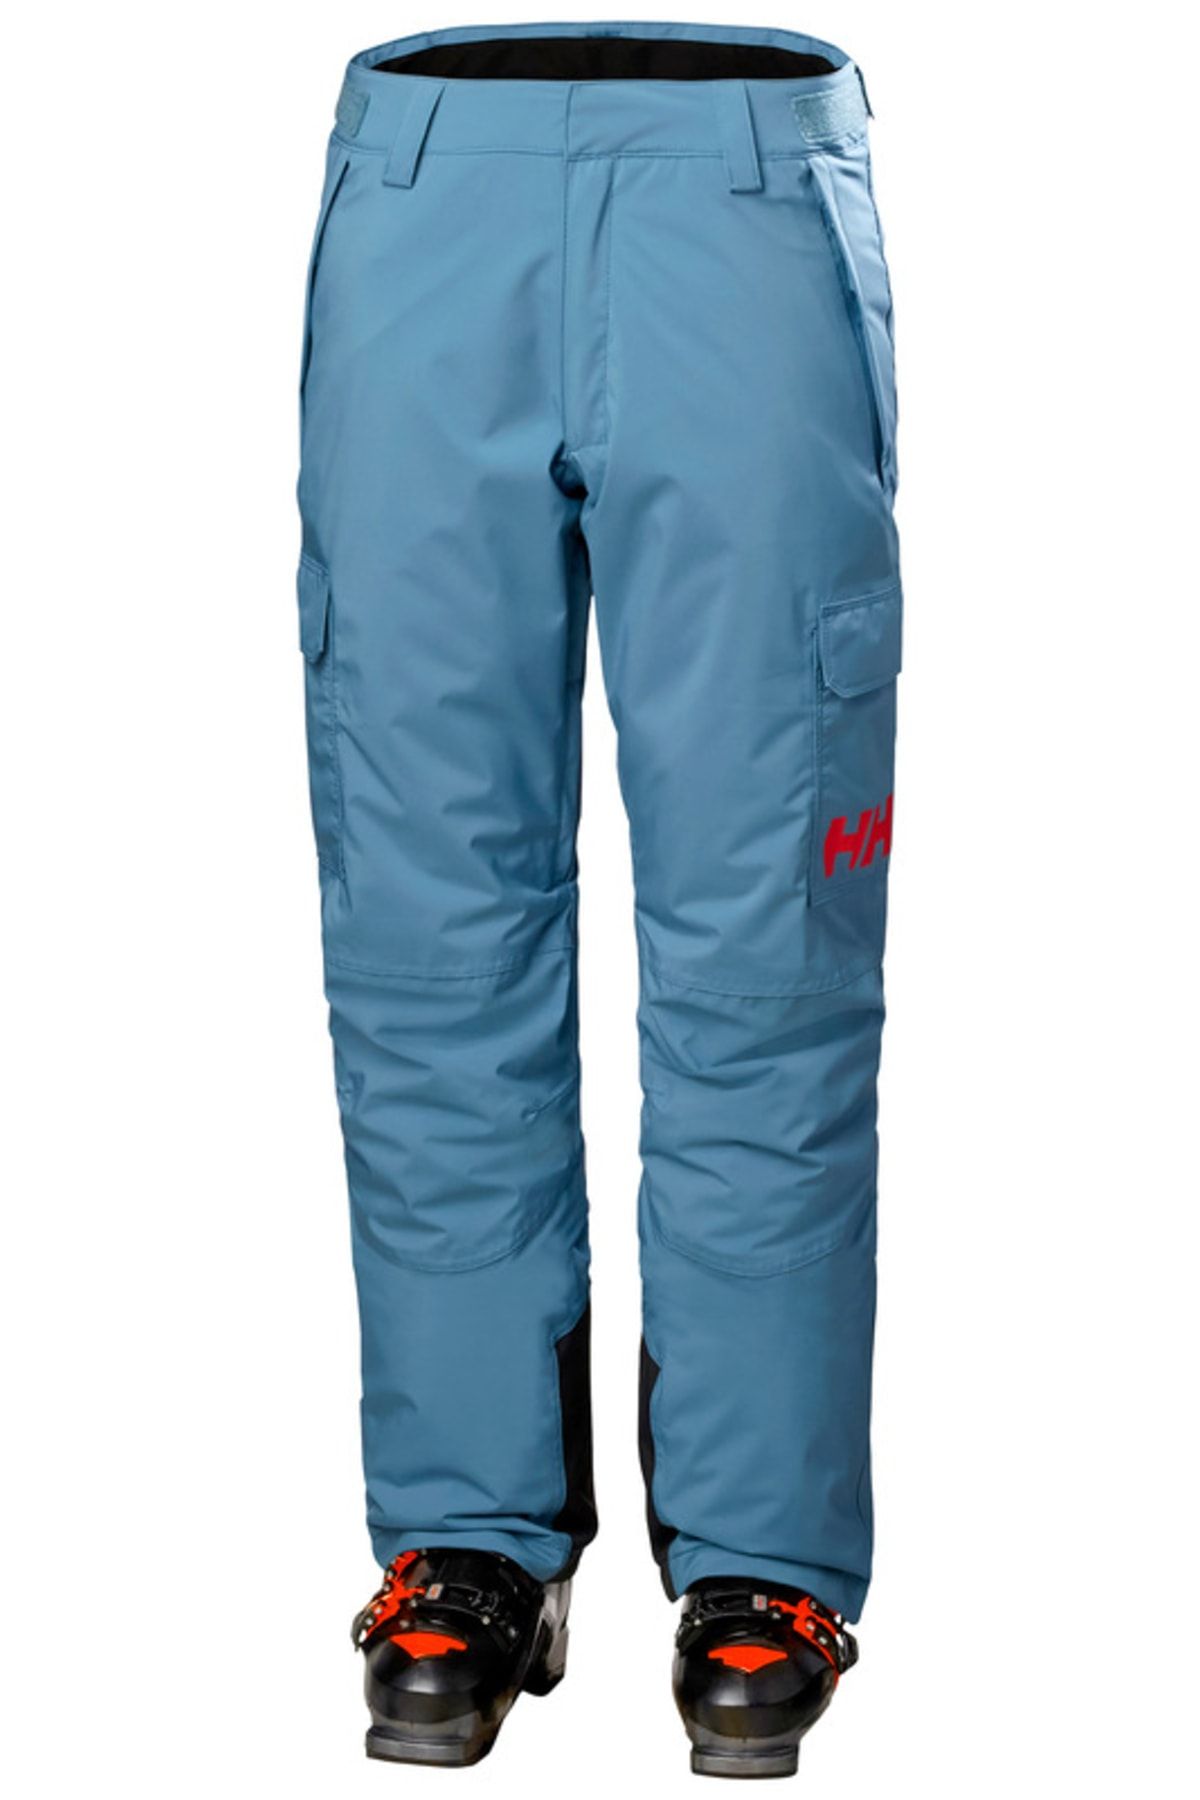 Helly Hansen Hh W Swıtch Cargo Insulated Pant - Kadın Kayak Ve Snowboard Pantolonu